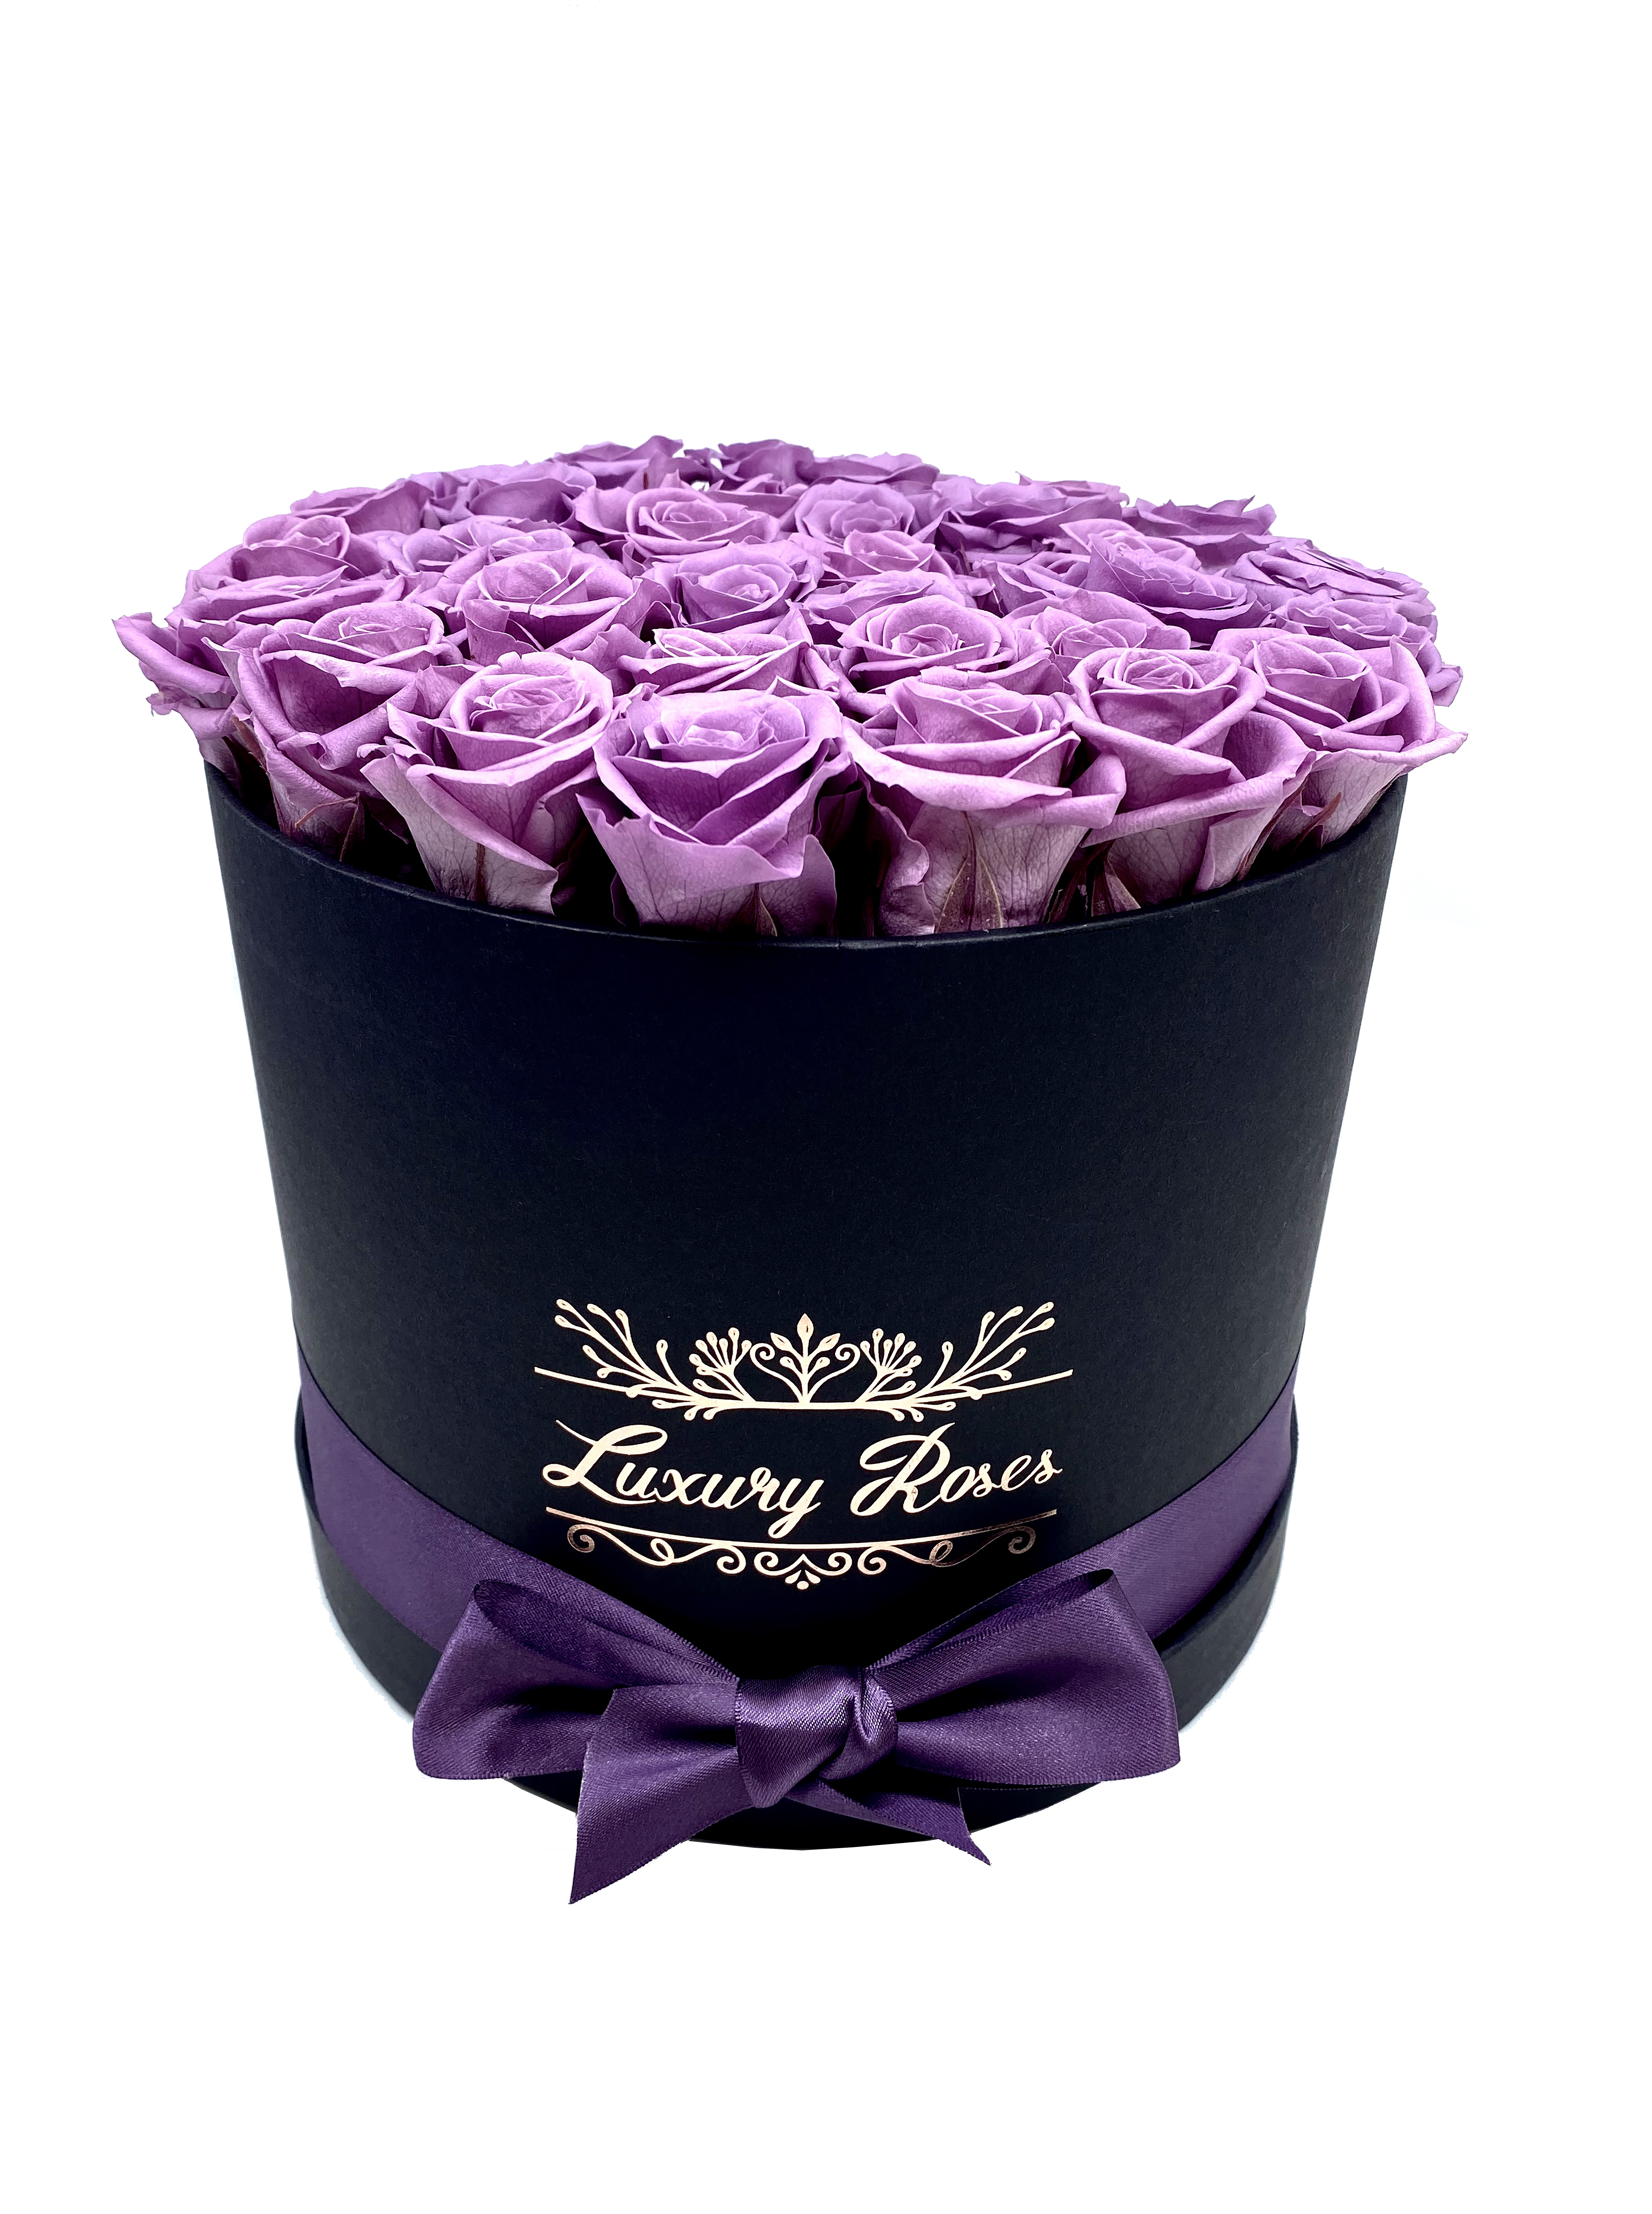 Luxury rose